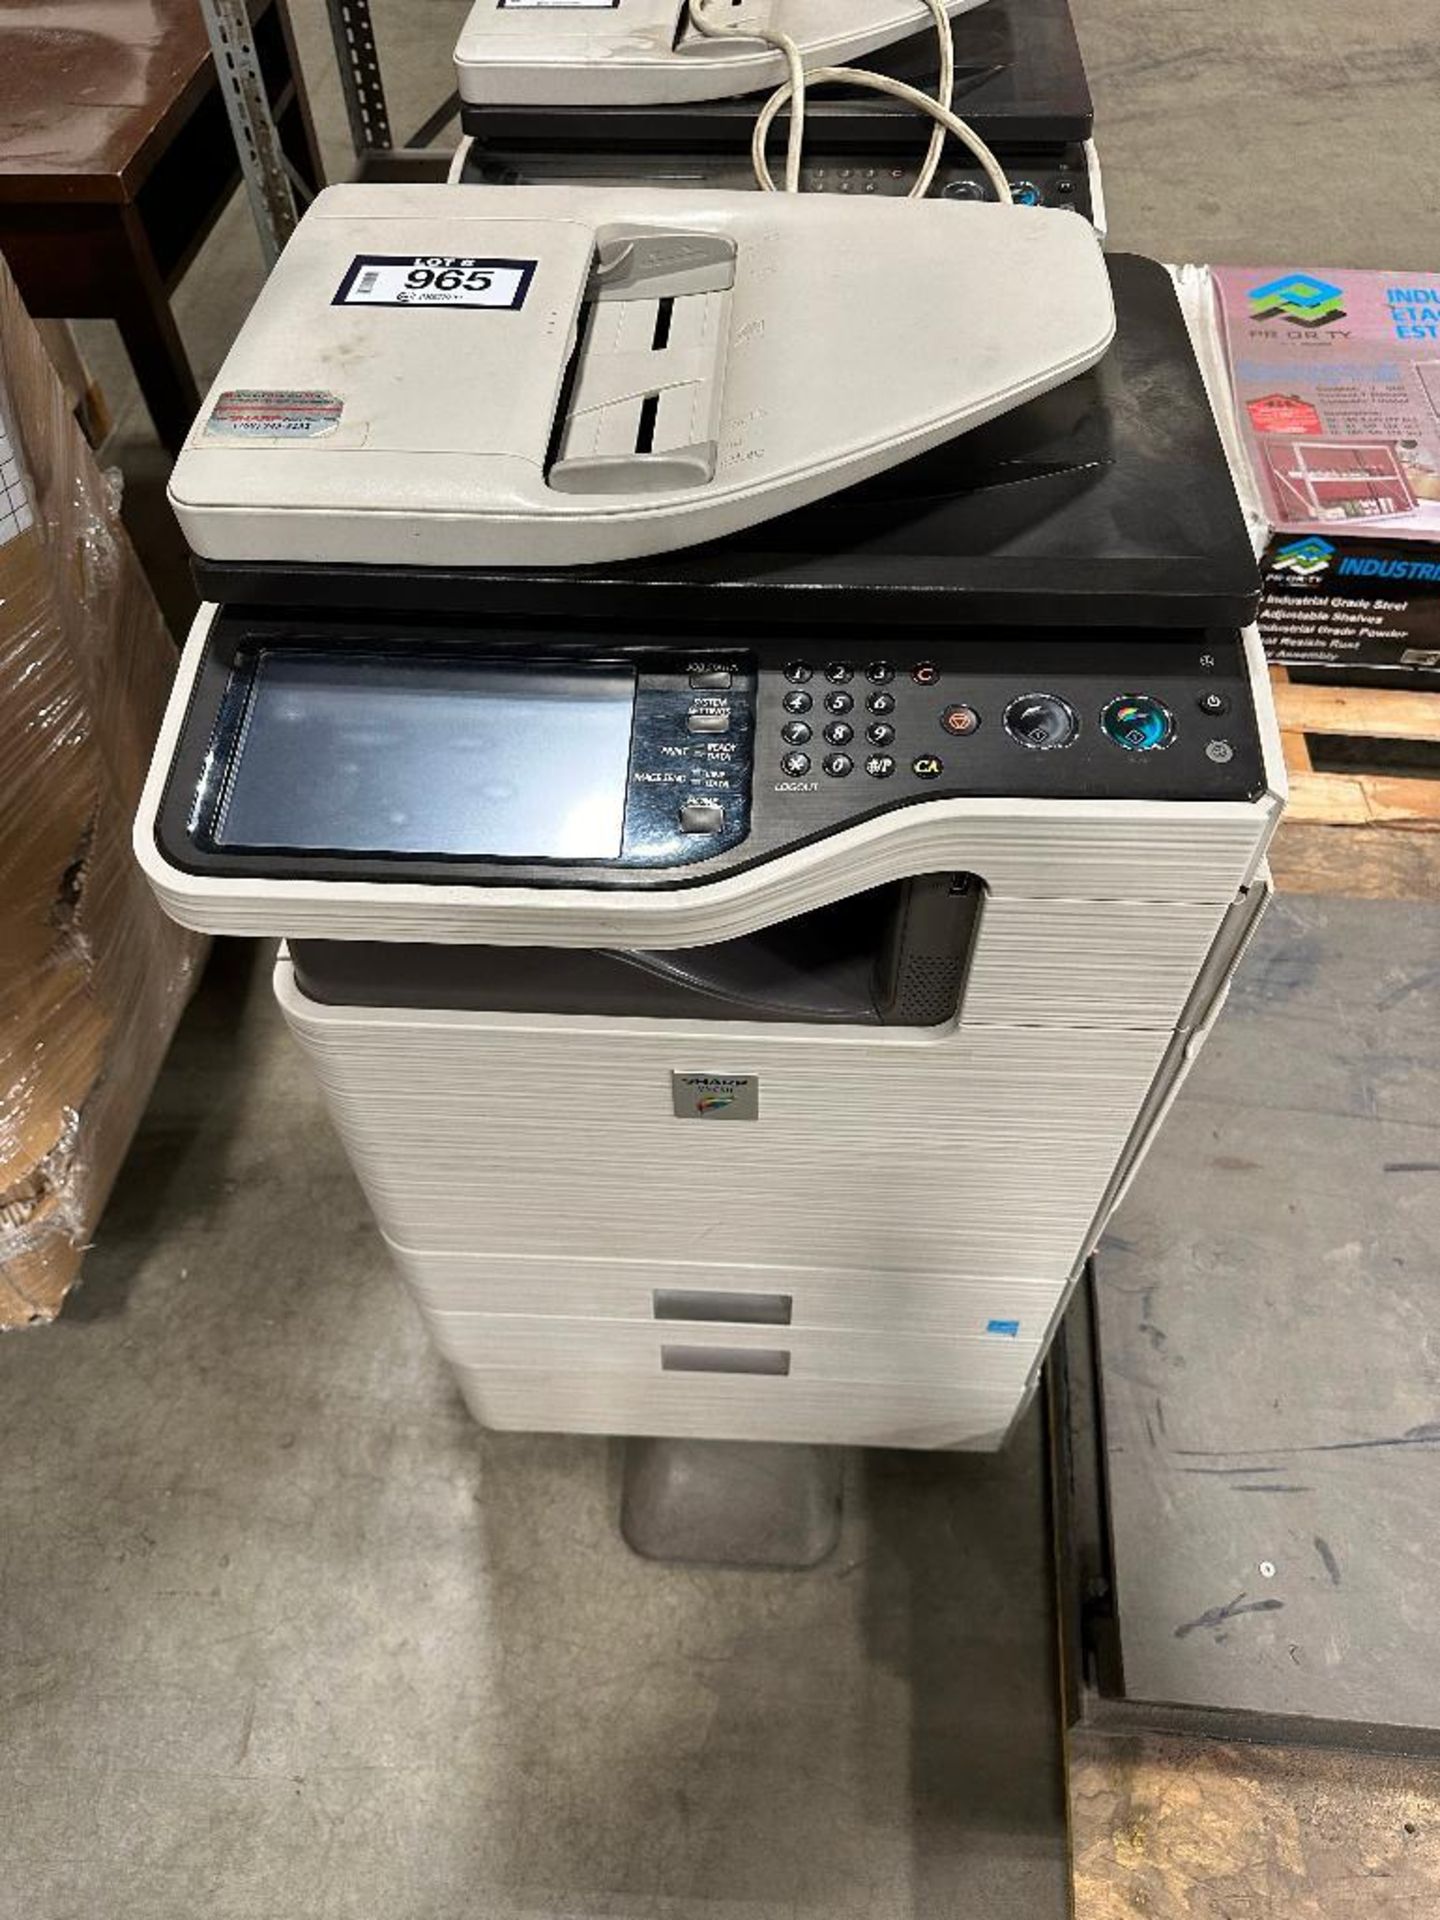 Sharp MX-C311 Printer/Copier - Image 2 of 4